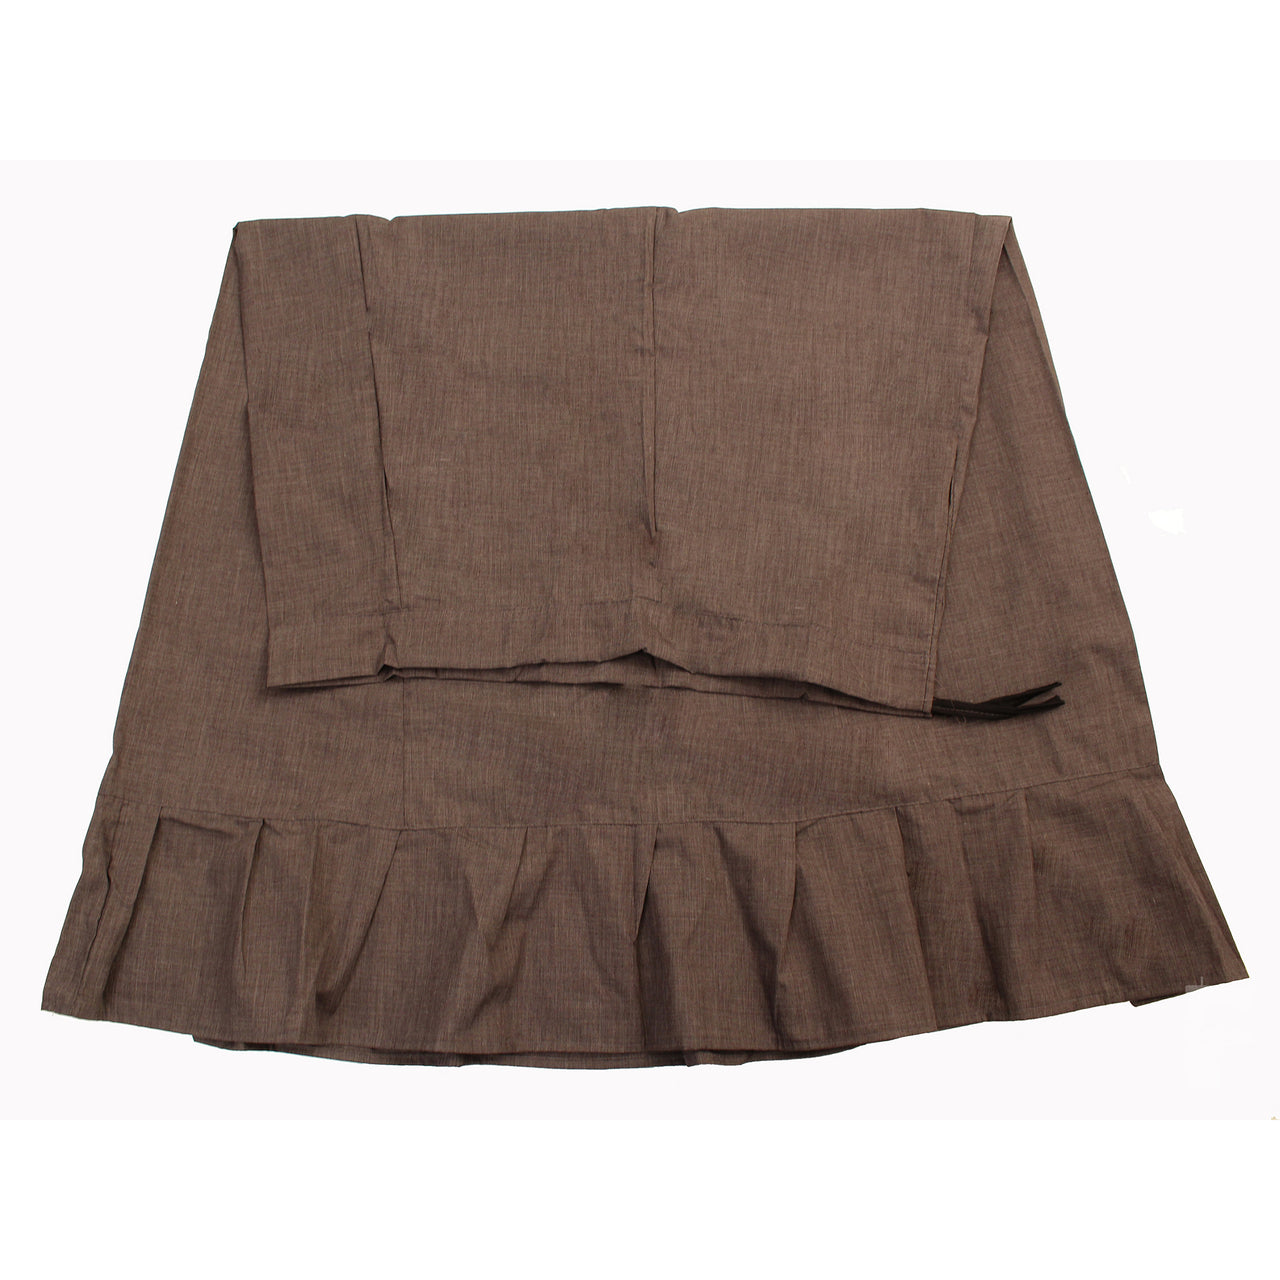 Grey - Sari (Saree) Petticoat - Available in S, M, L & XL - Underskirts For Sari's